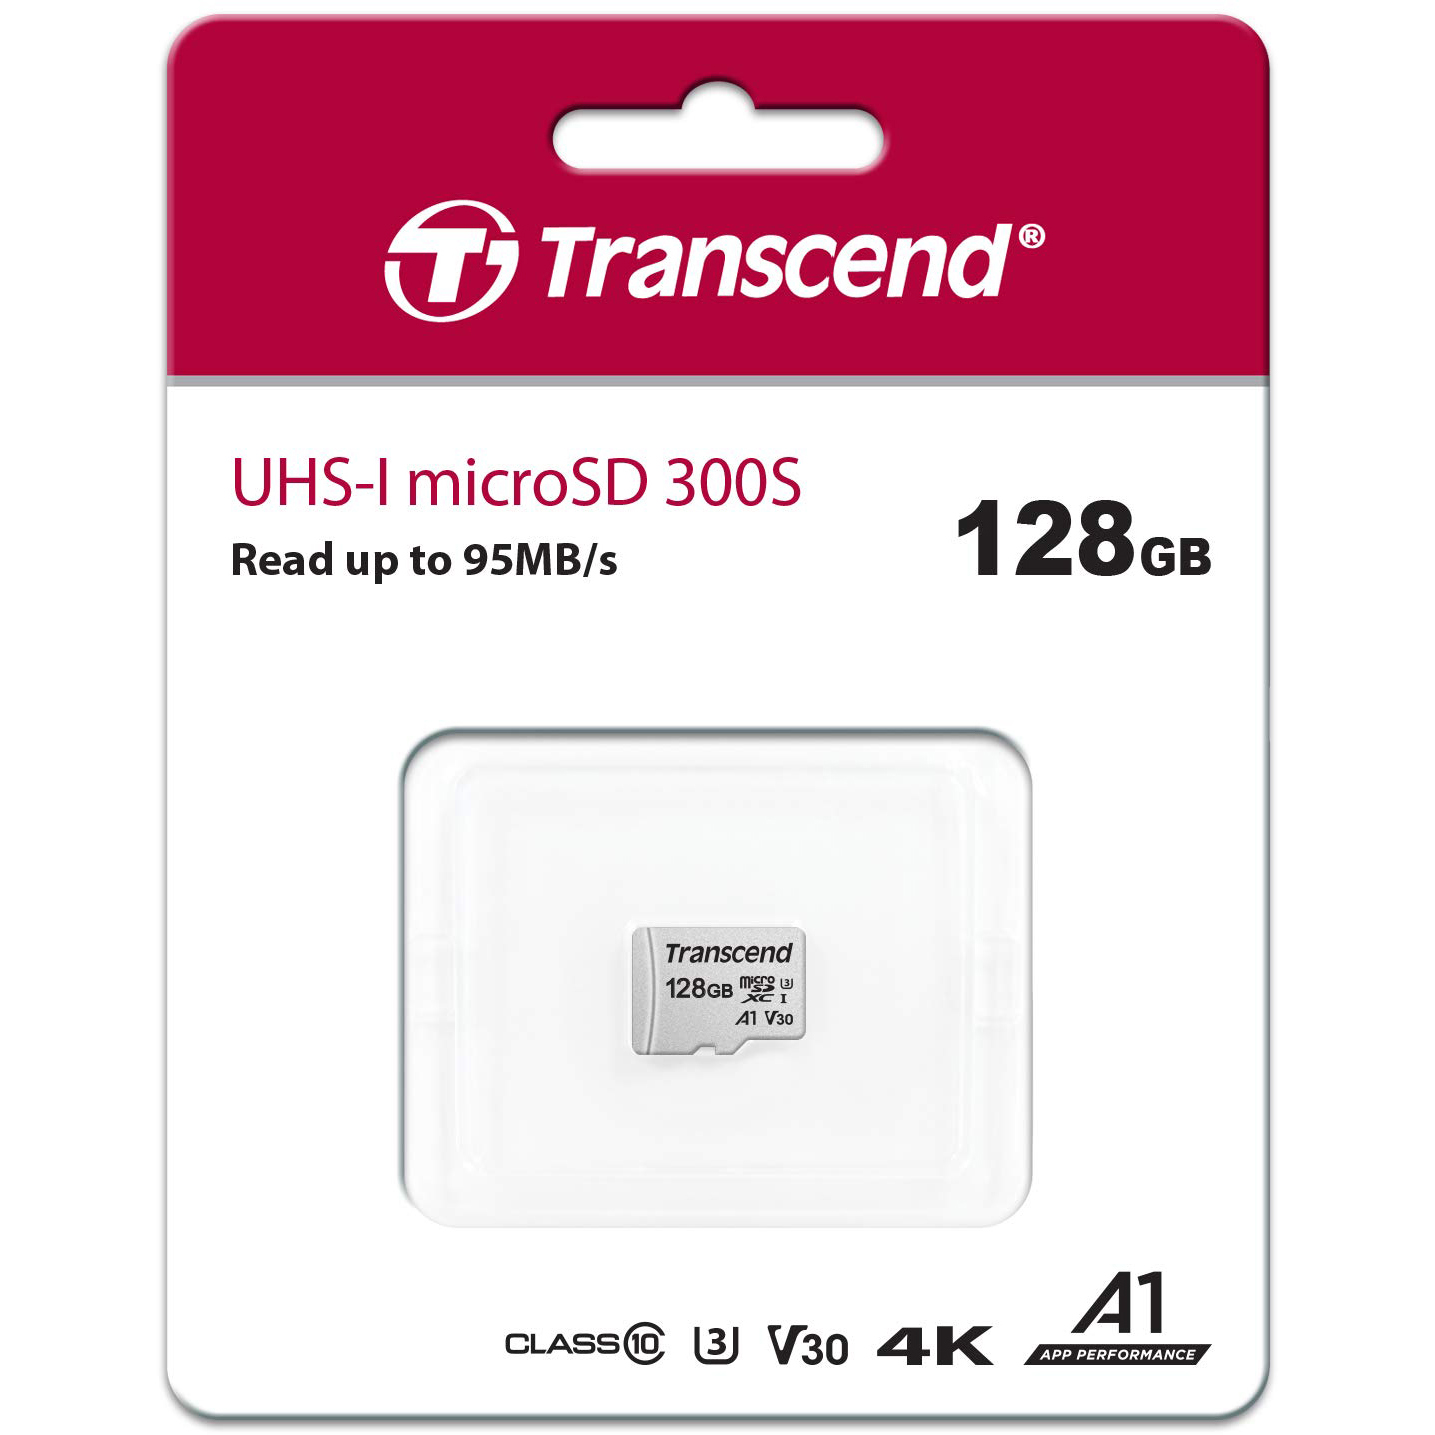 Original Transcend Class 10 128GB microSDXC Memory Card (TS128GUSD300S)